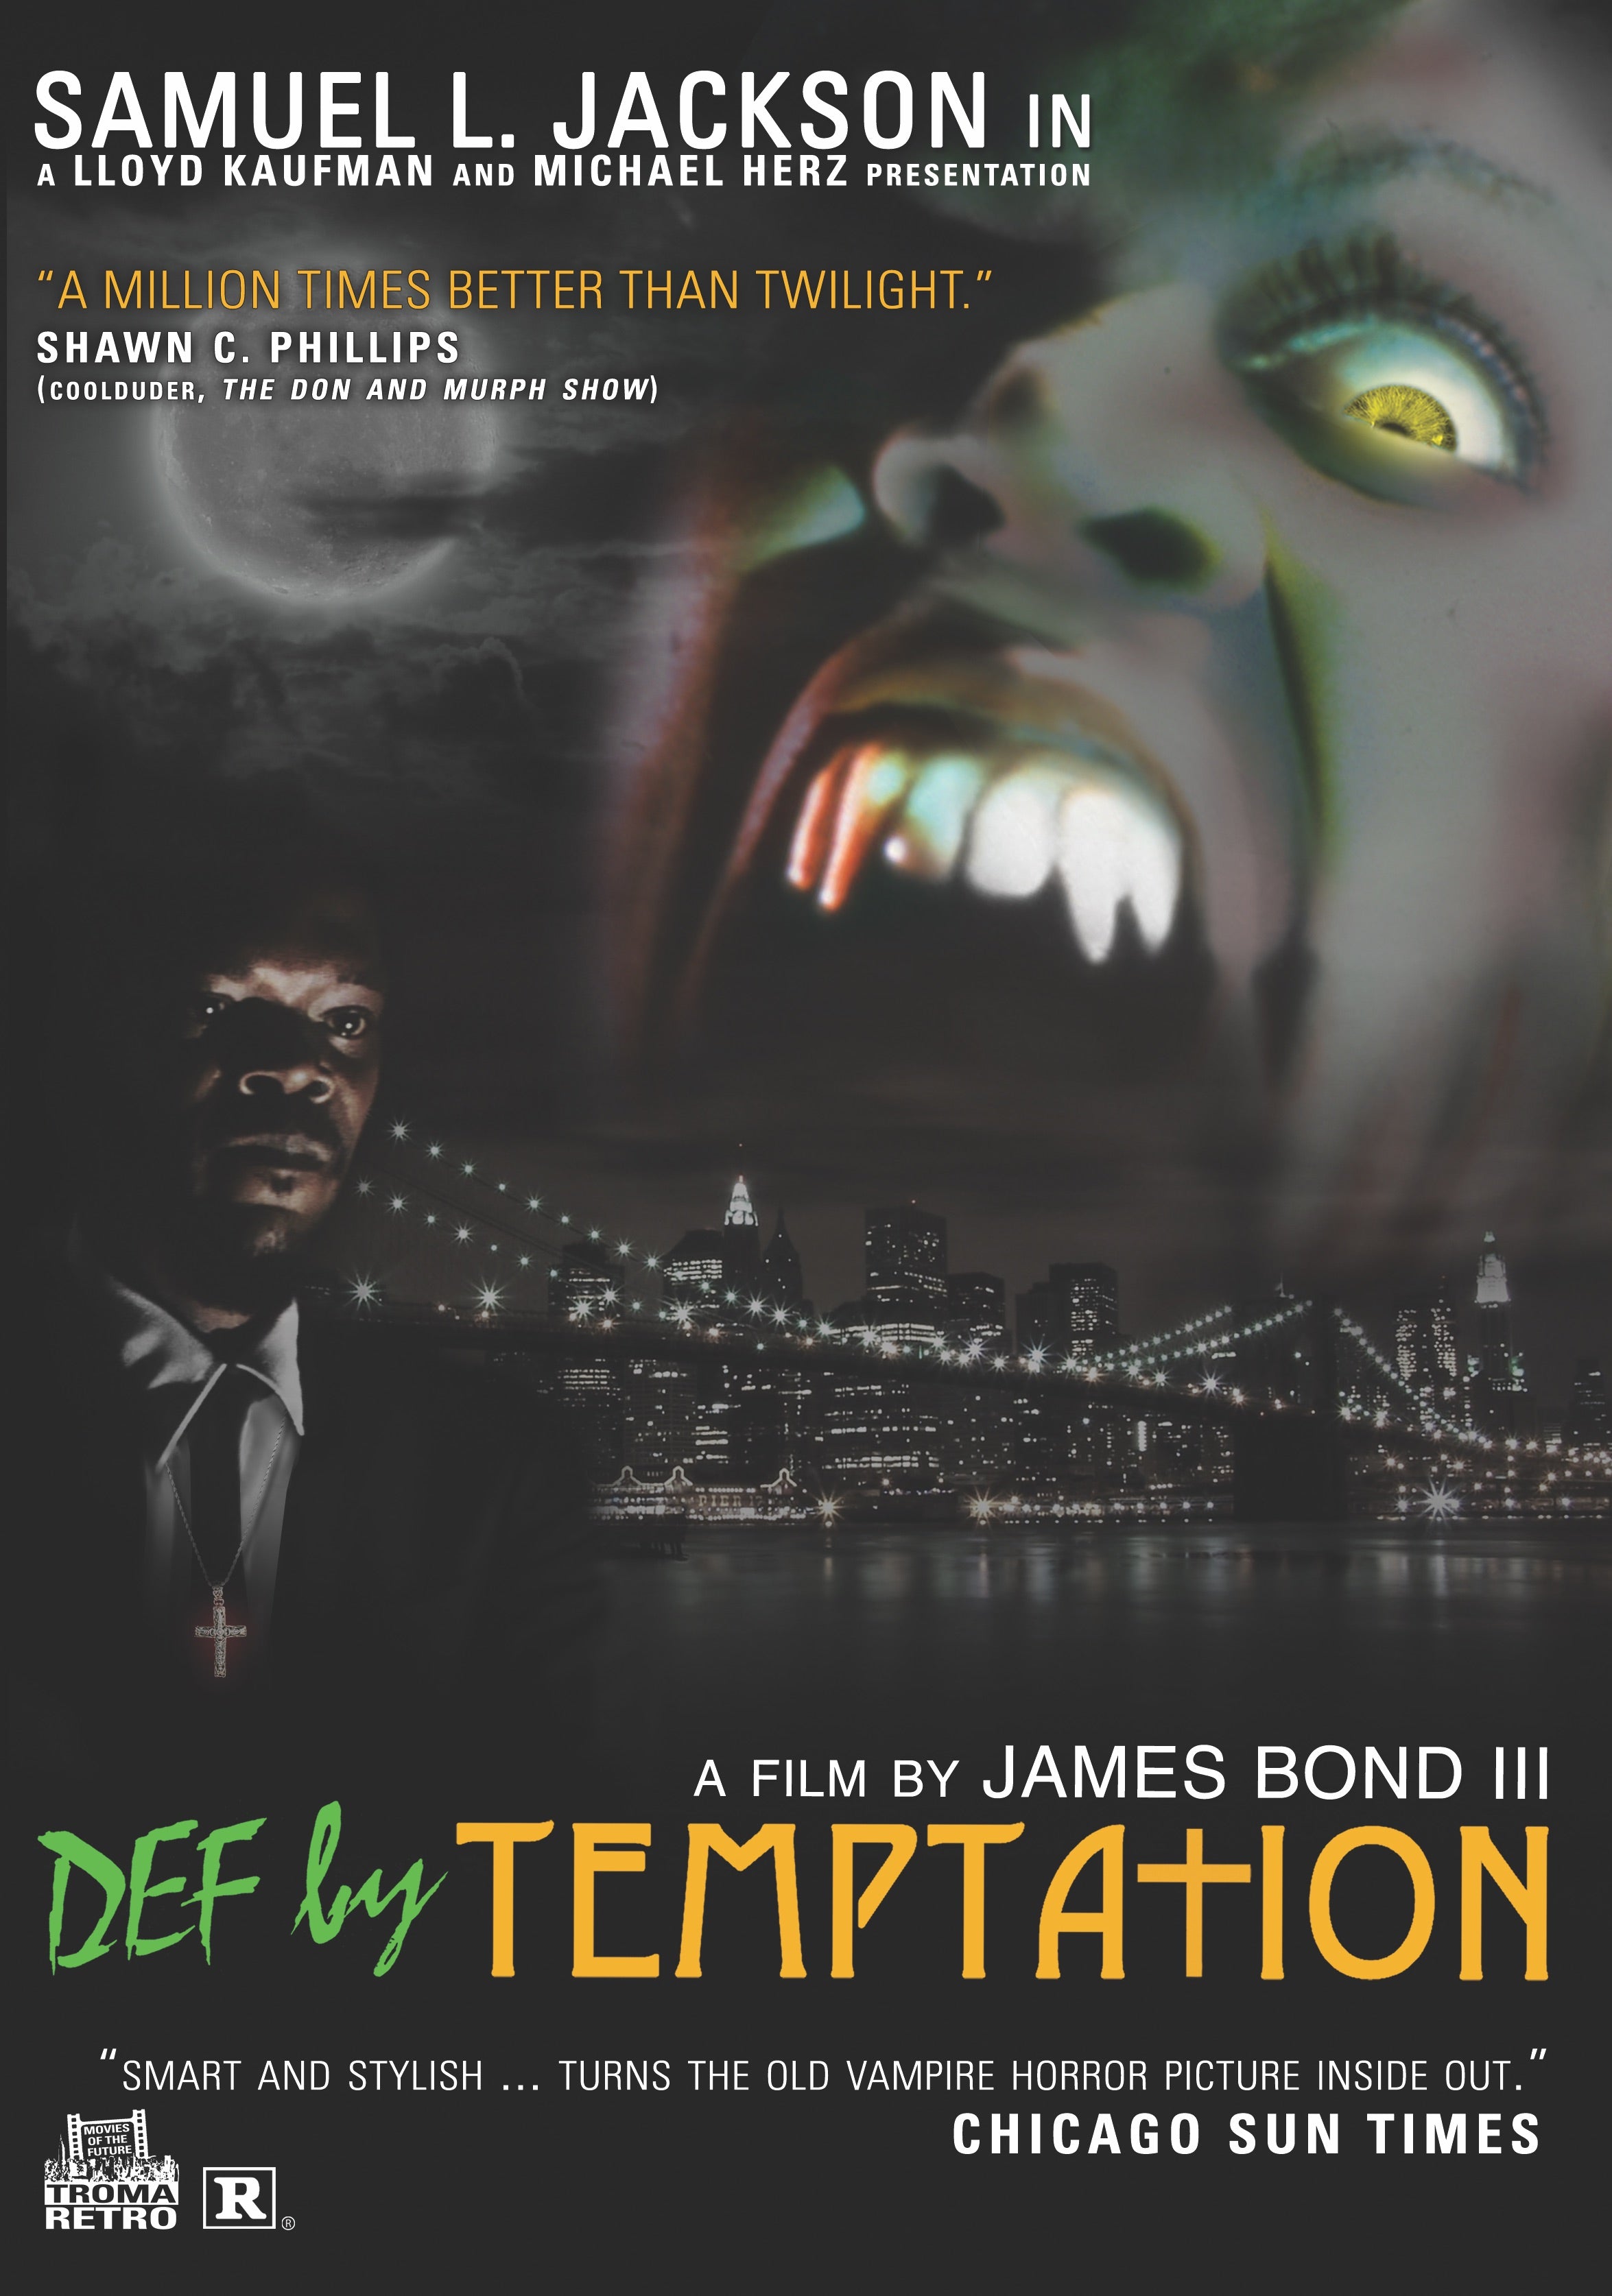 DEF BY TEMPTATION DVD